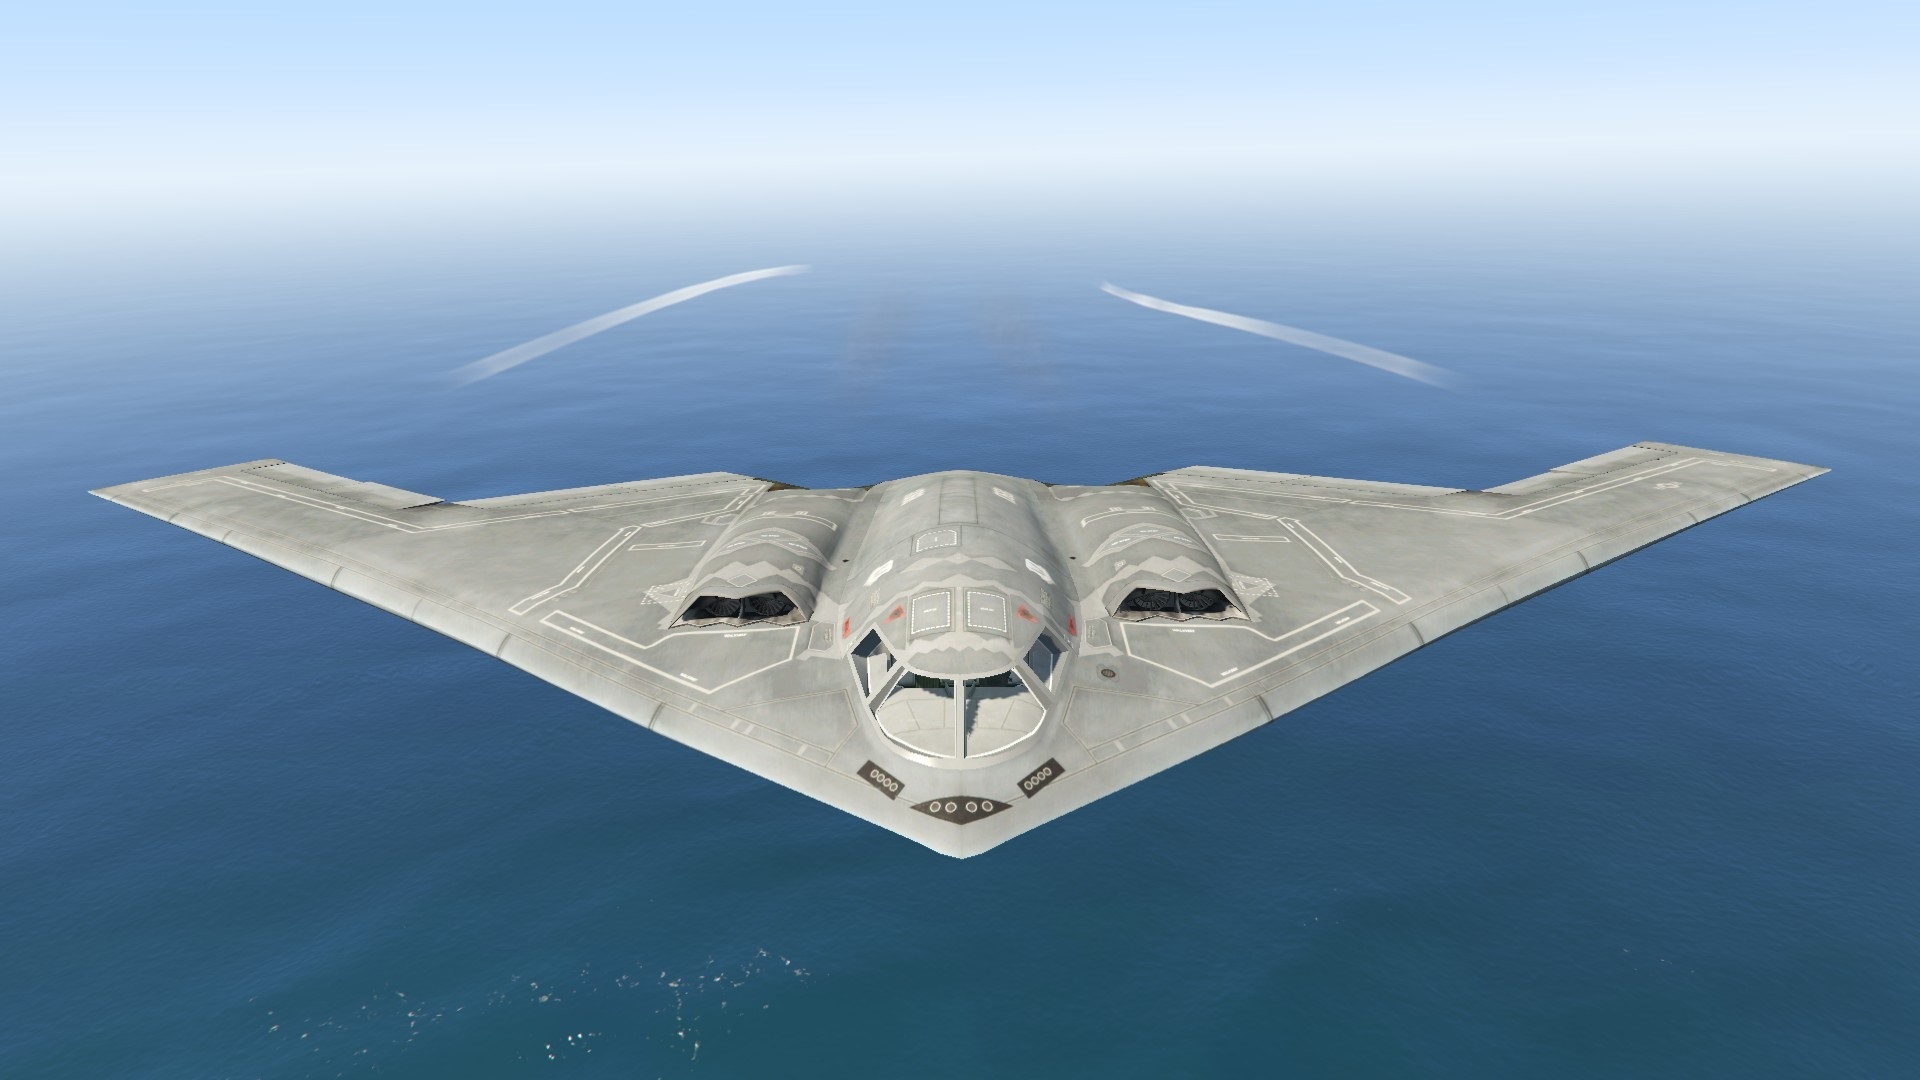 B-2A Spirit Stealth Bomber